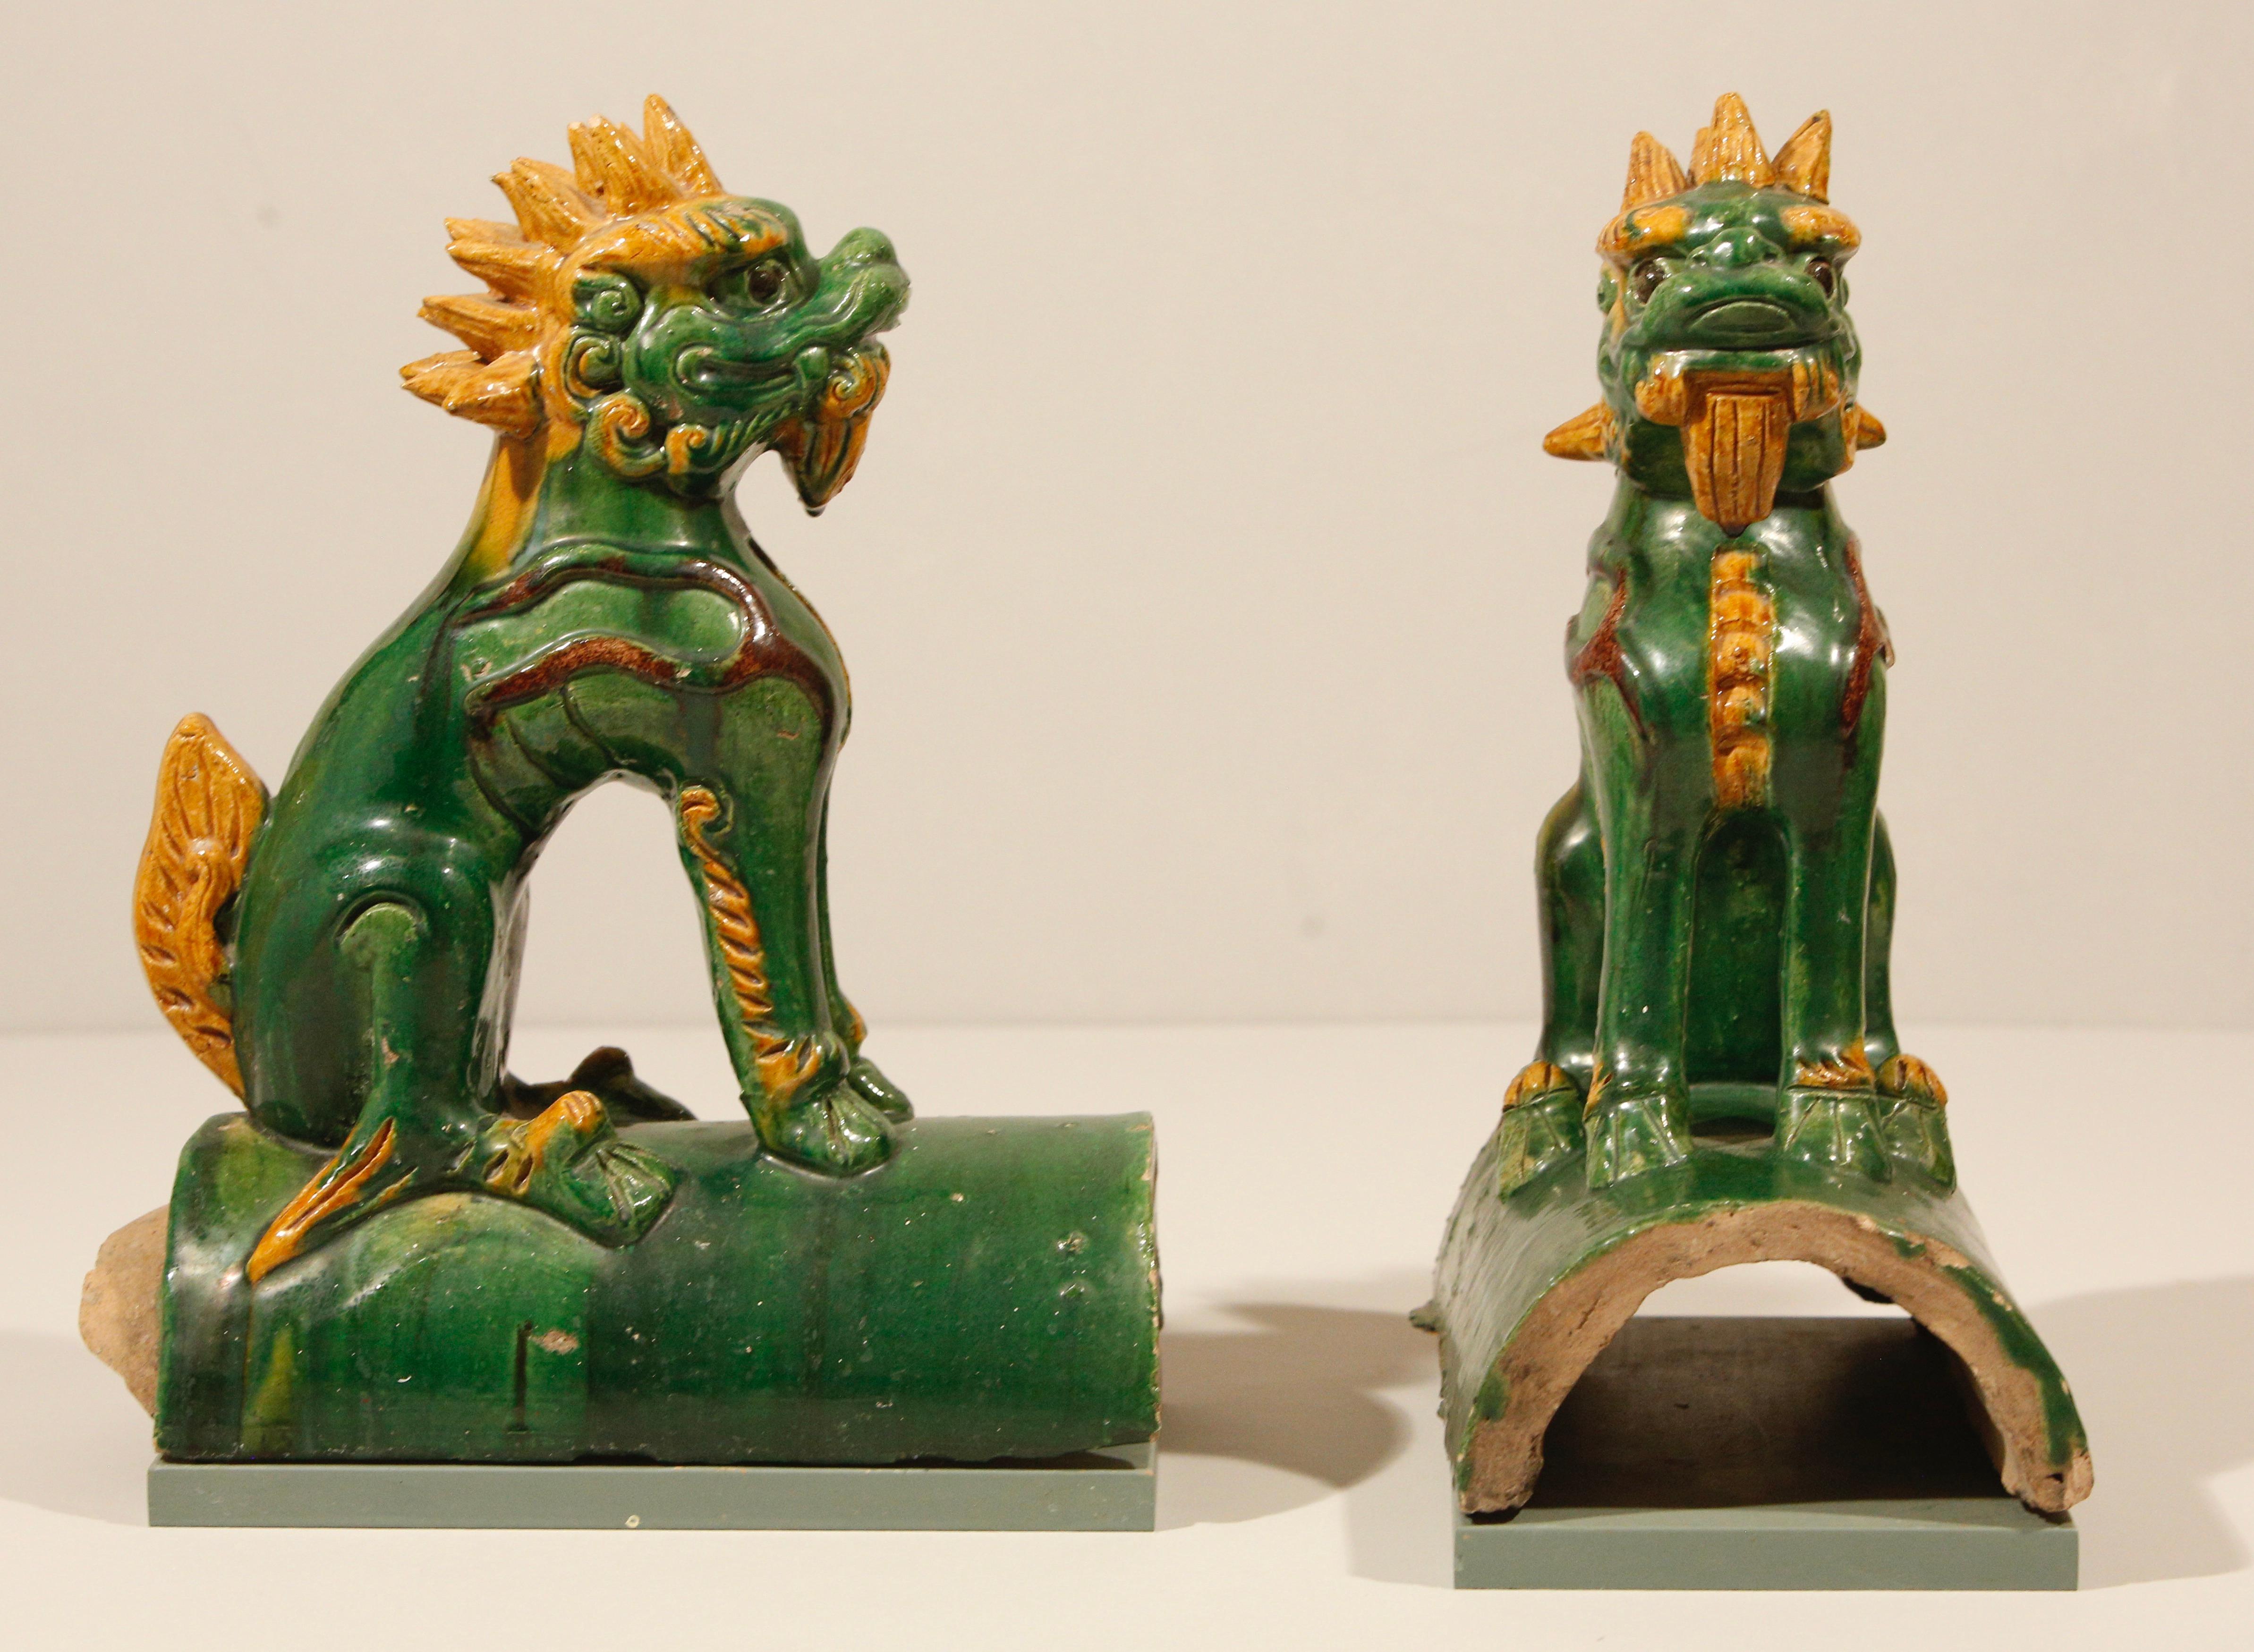 Foo Dogs Chinese sancai architectural roof tiles in green and mustard / orange shades.

Les anciennes statues chinoises de lions gardiens (également connues sous le nom de 